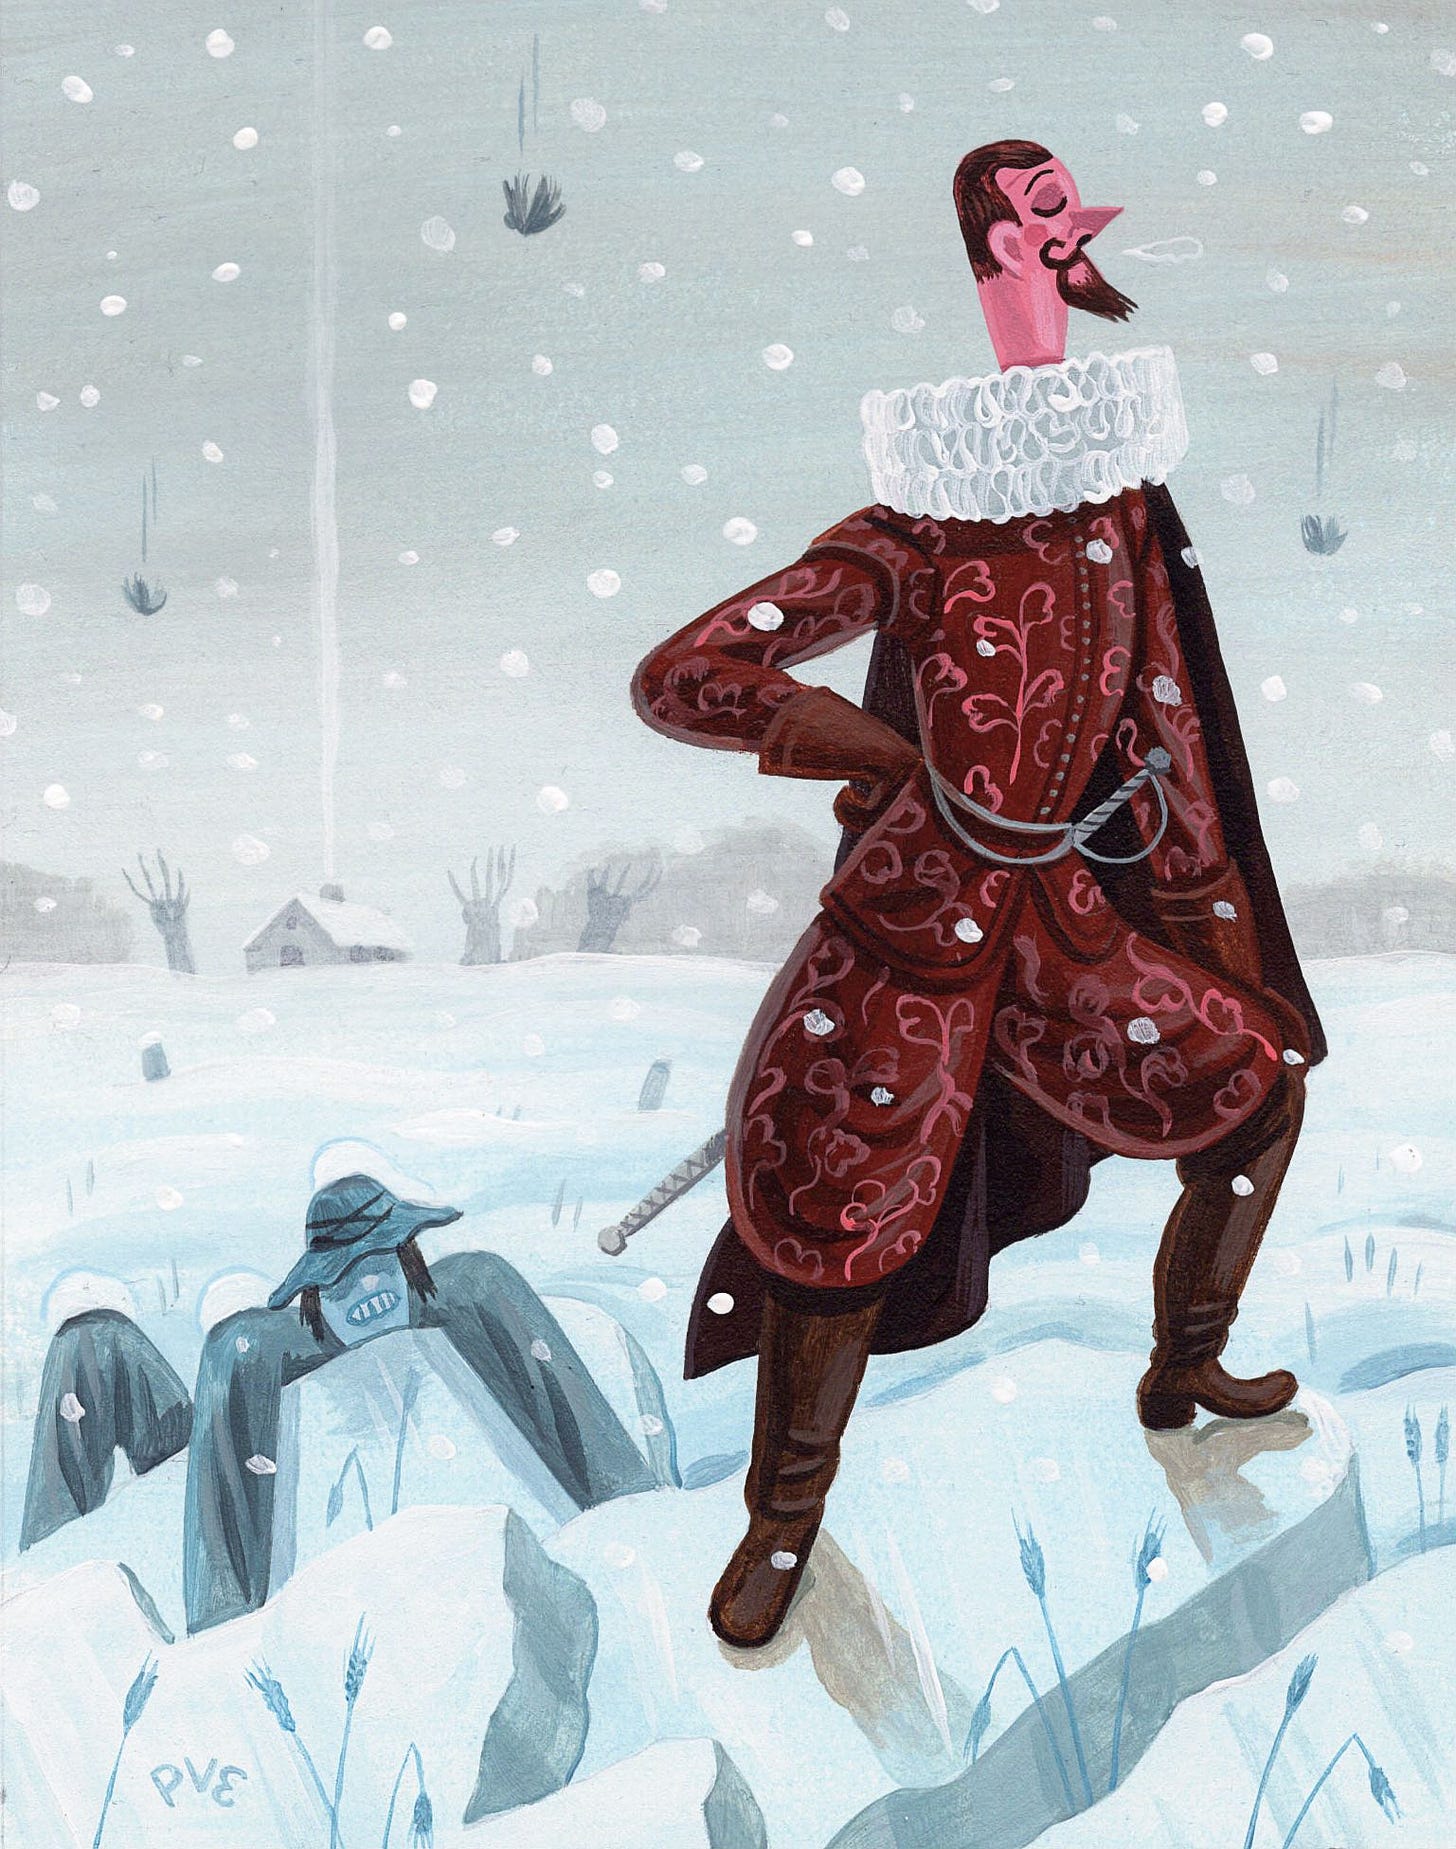 Illustration of man in snow